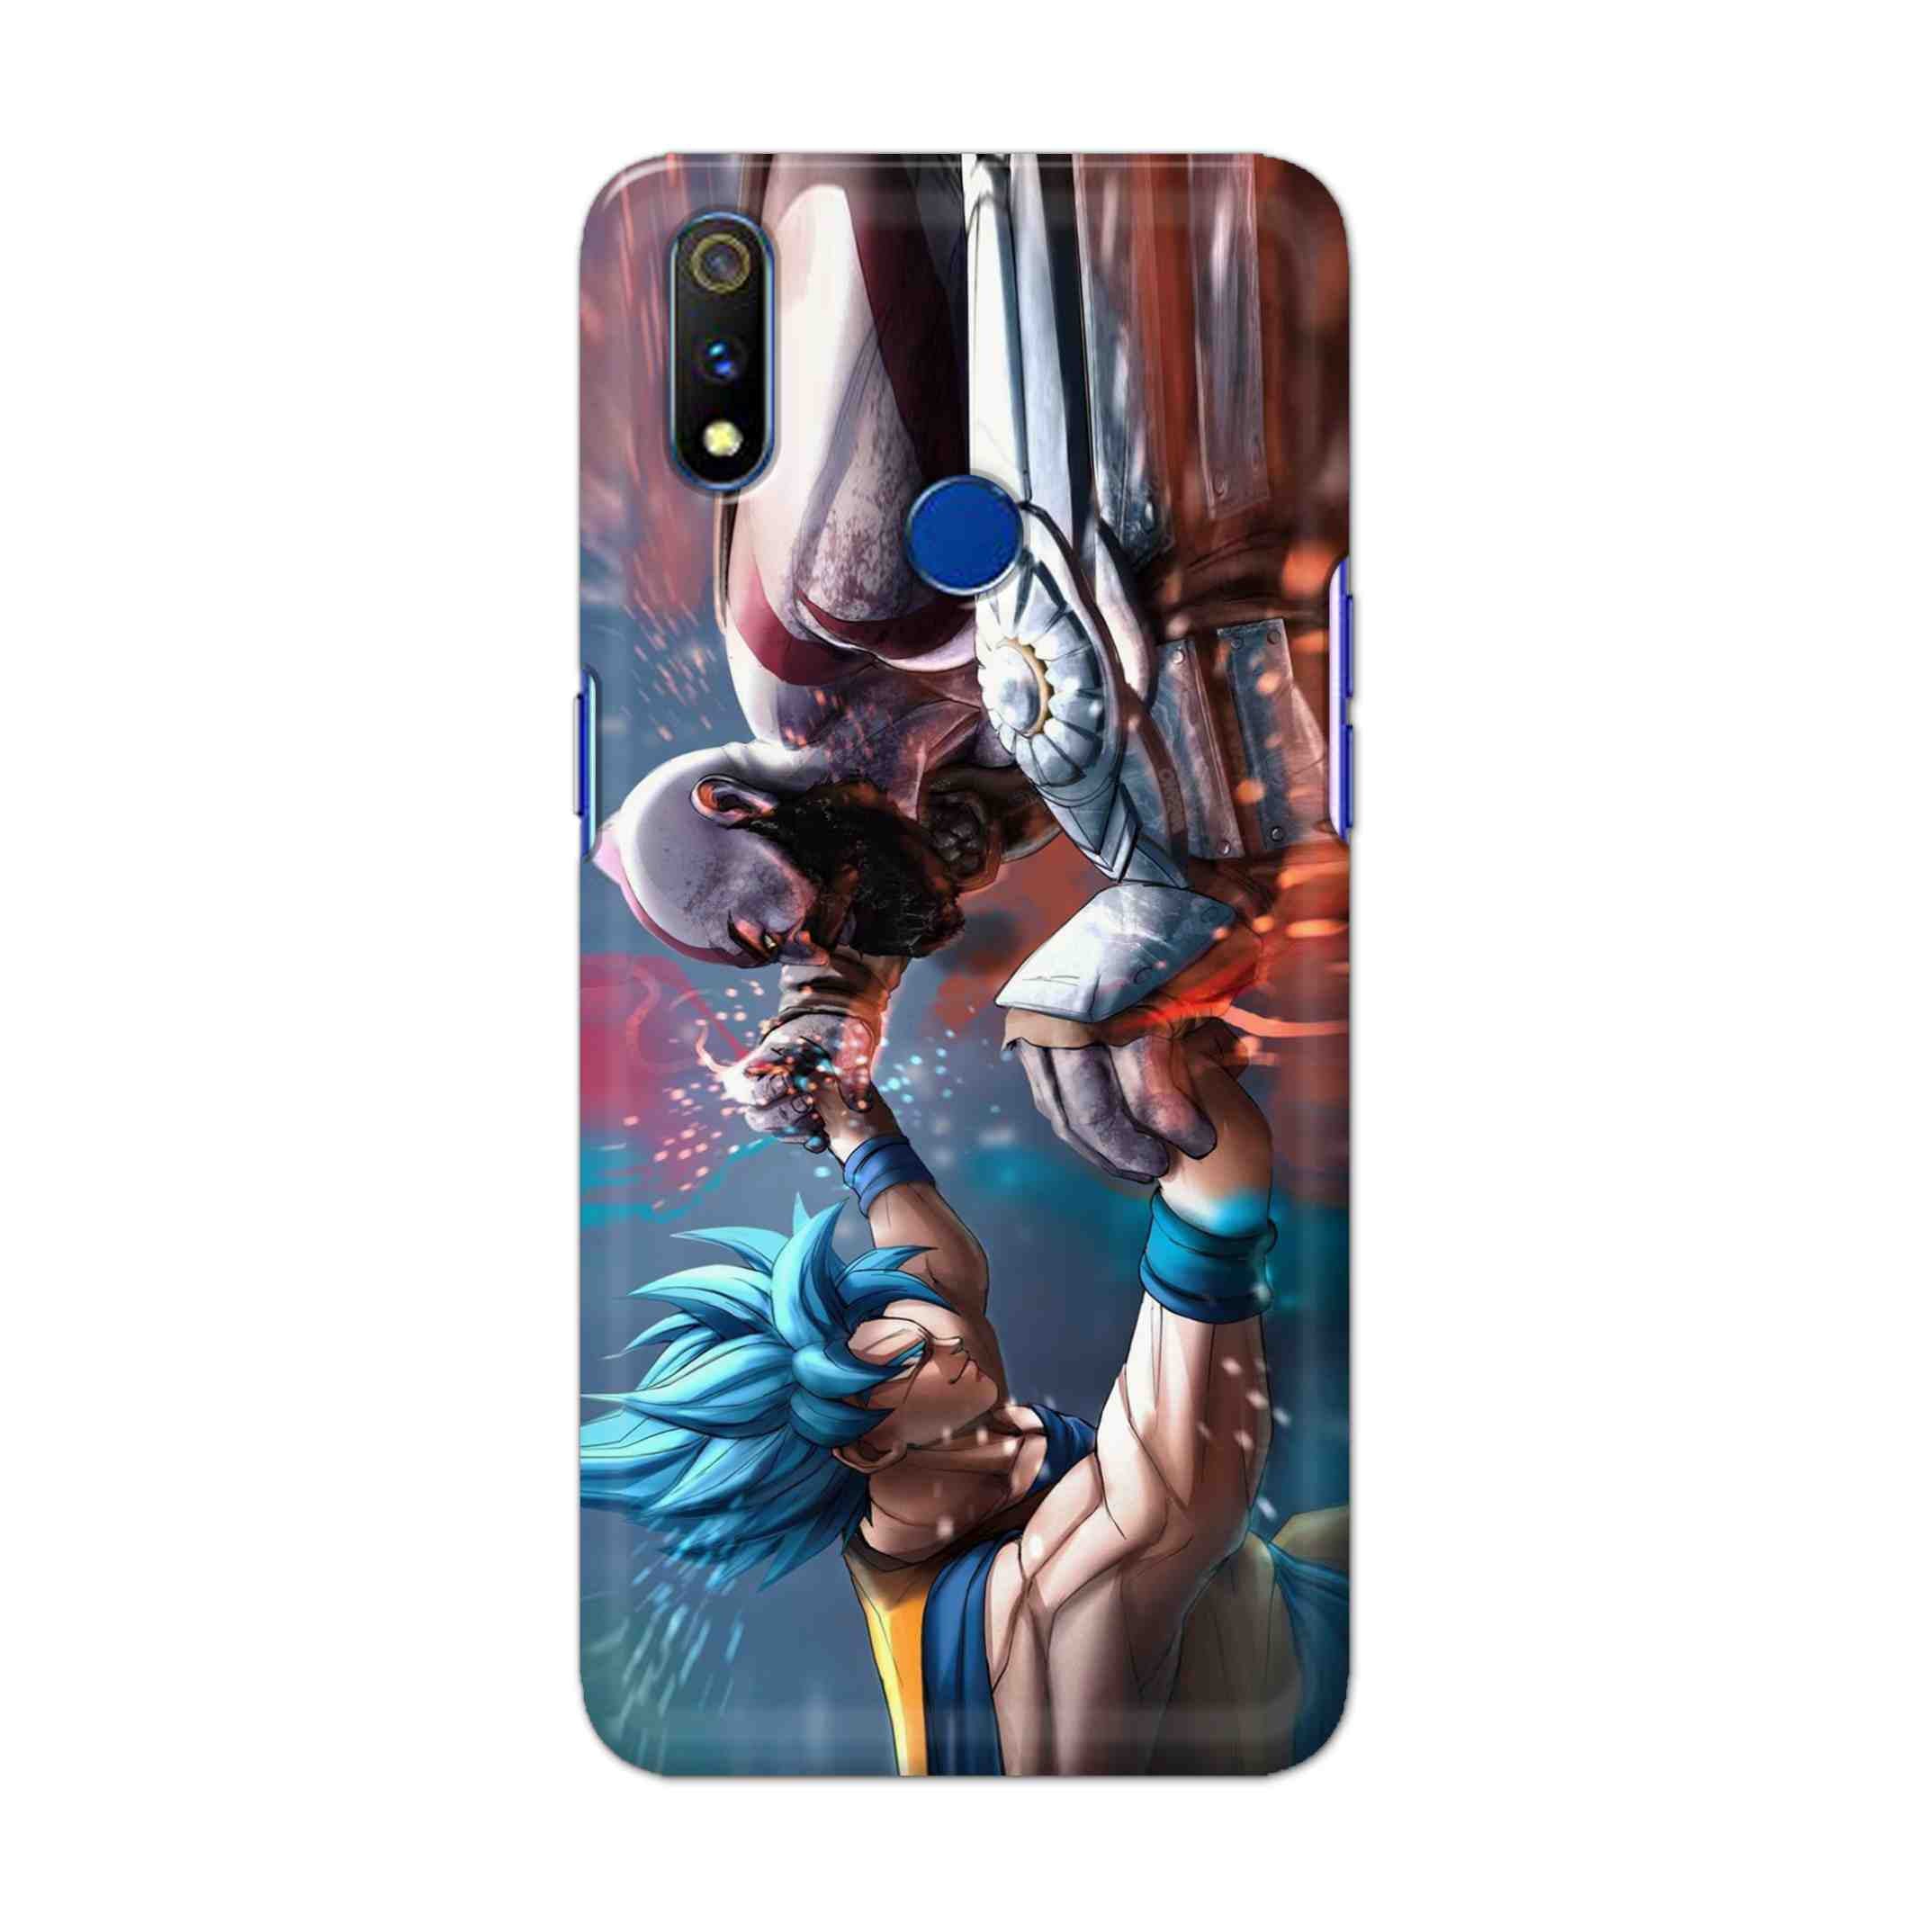 Buy Goku Vs Kratos Hard Back Mobile Phone Case Cover For Realme 3 Pro Online